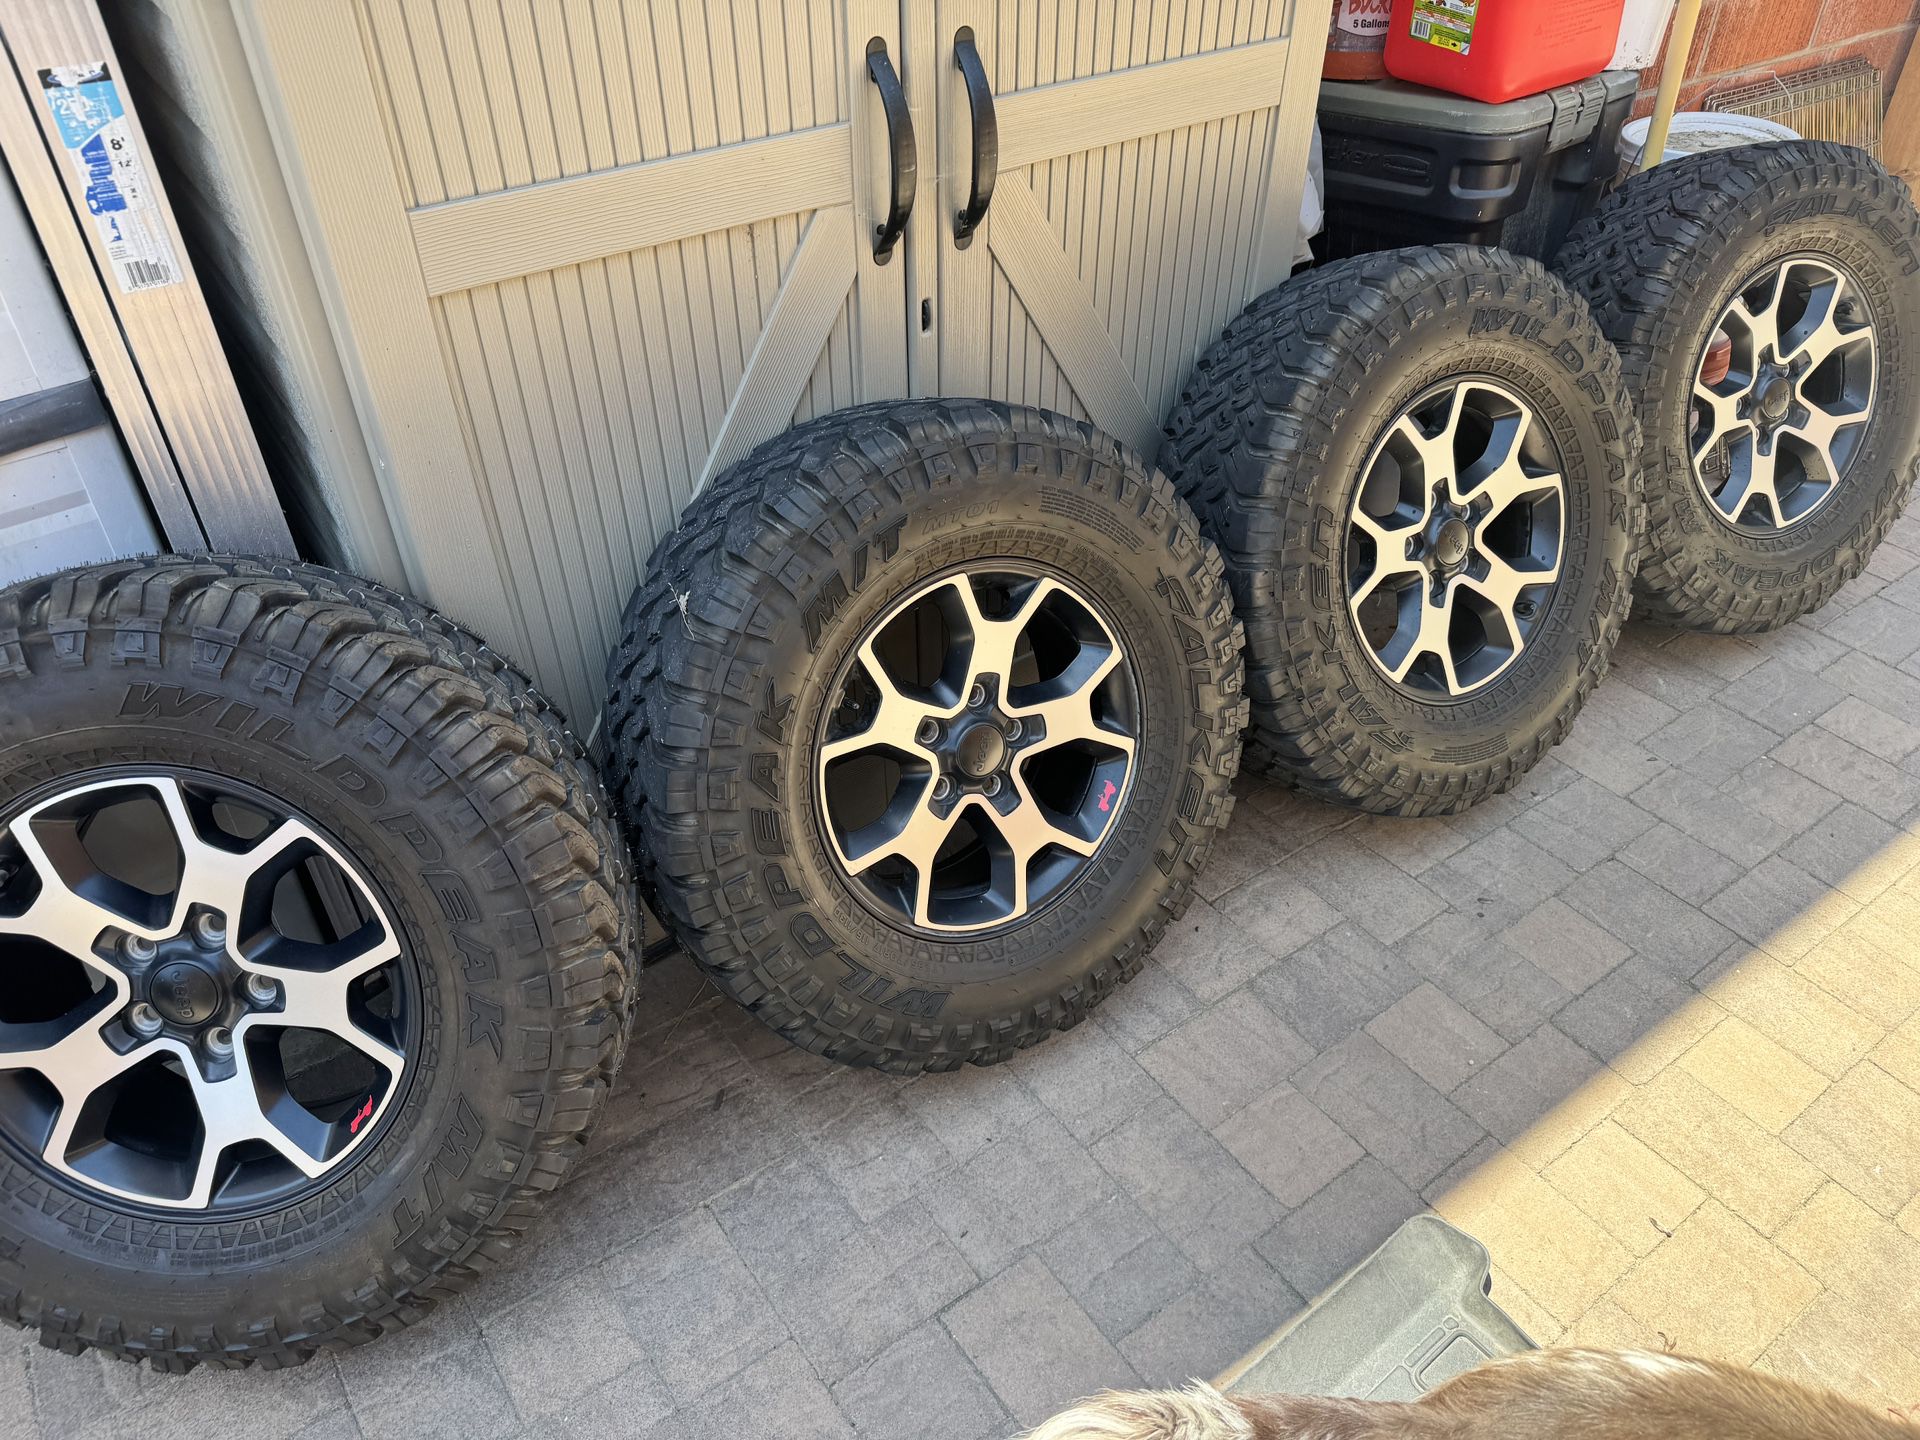 Jeep Wrangler Tires &Wheels